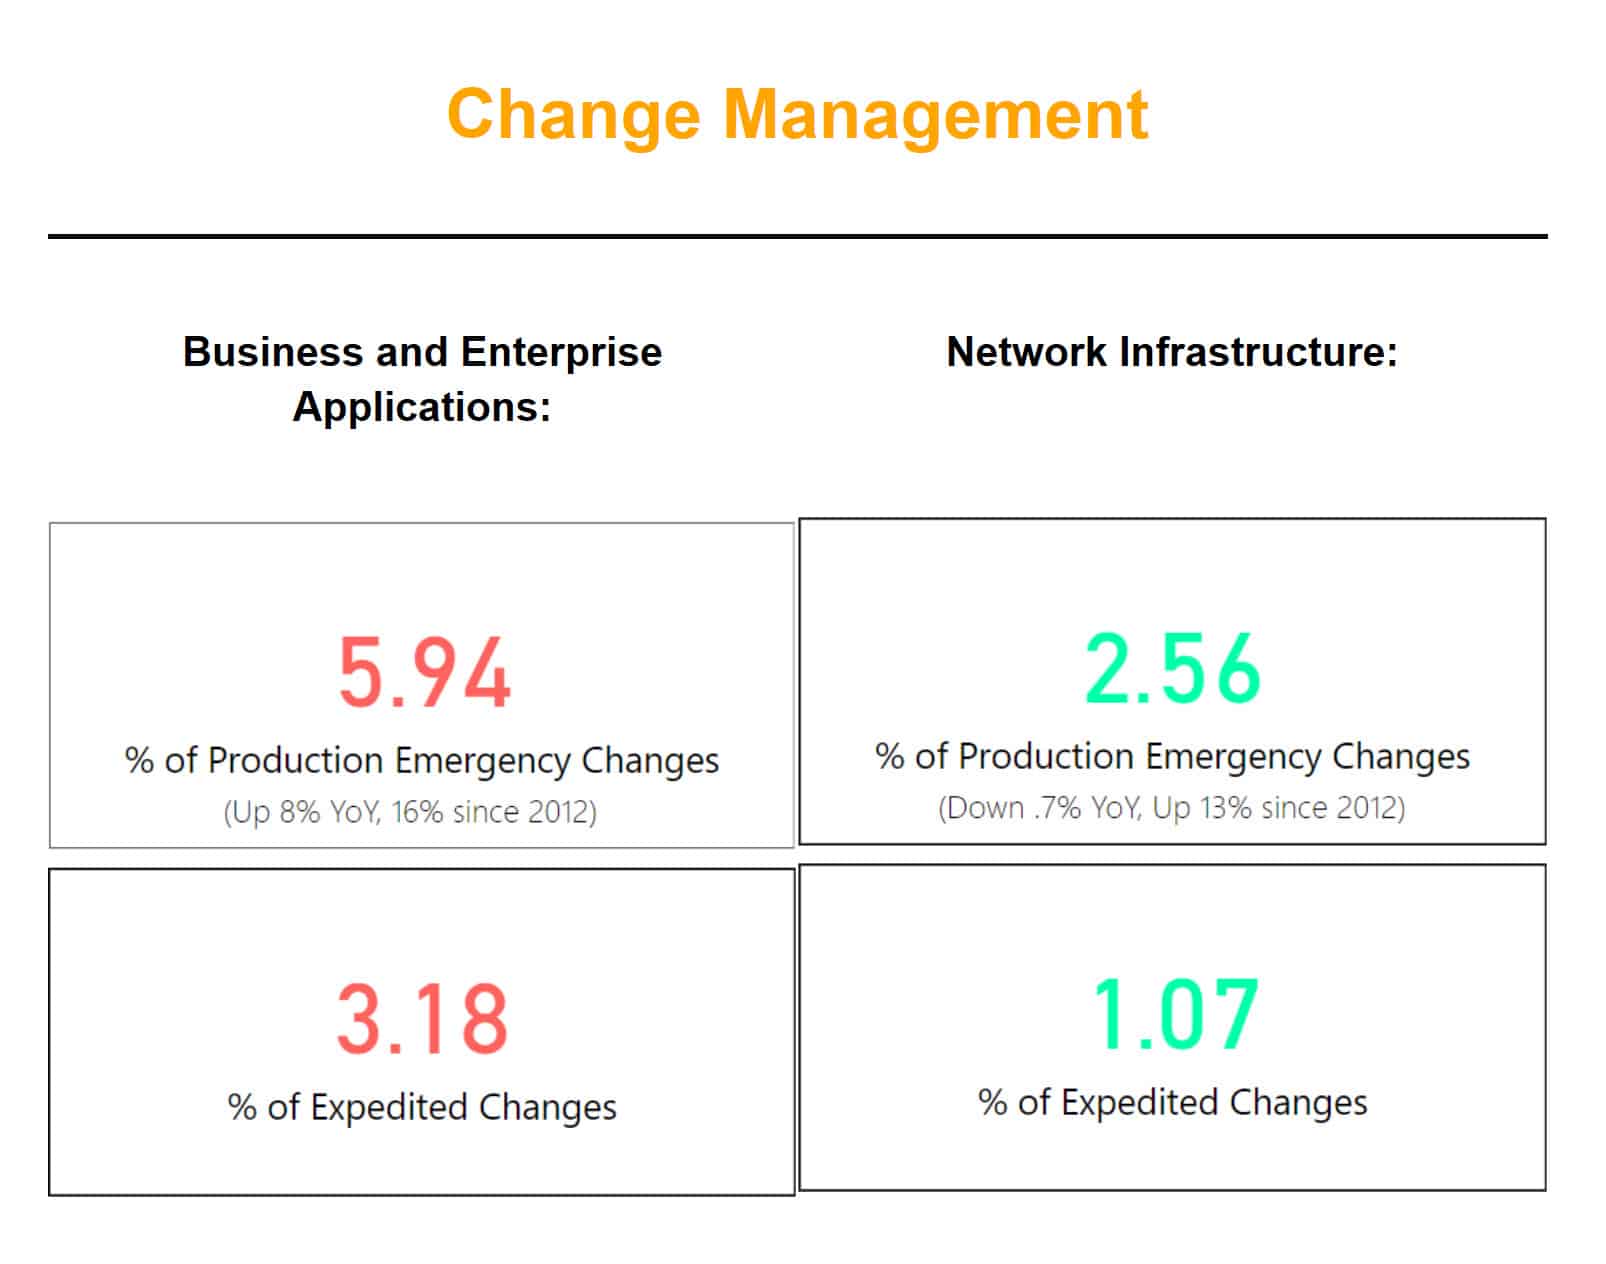 Change Management KPIs